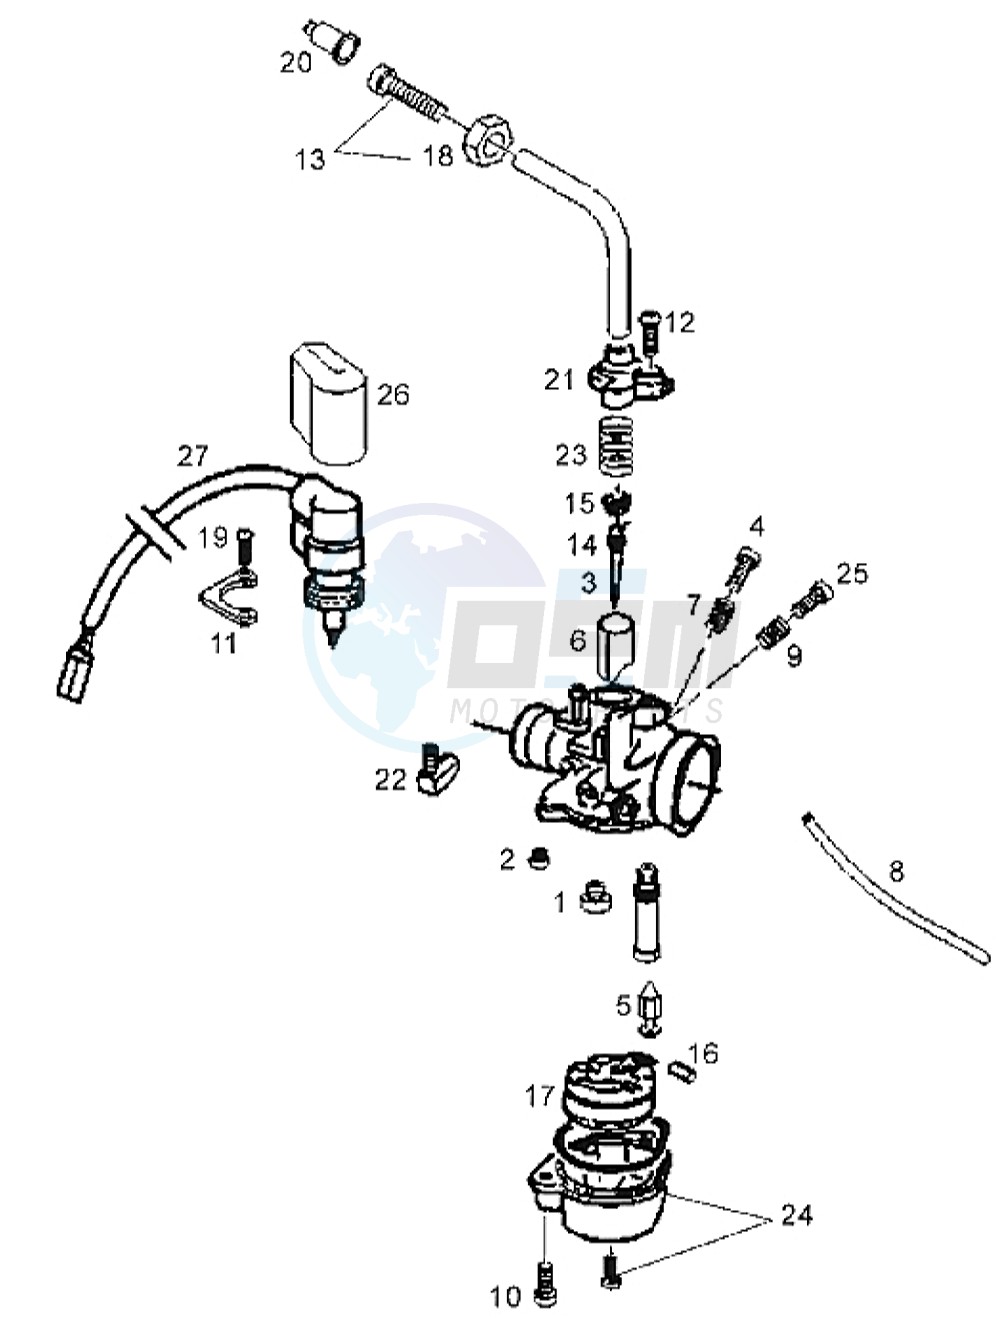 Carburettor - Components blueprint